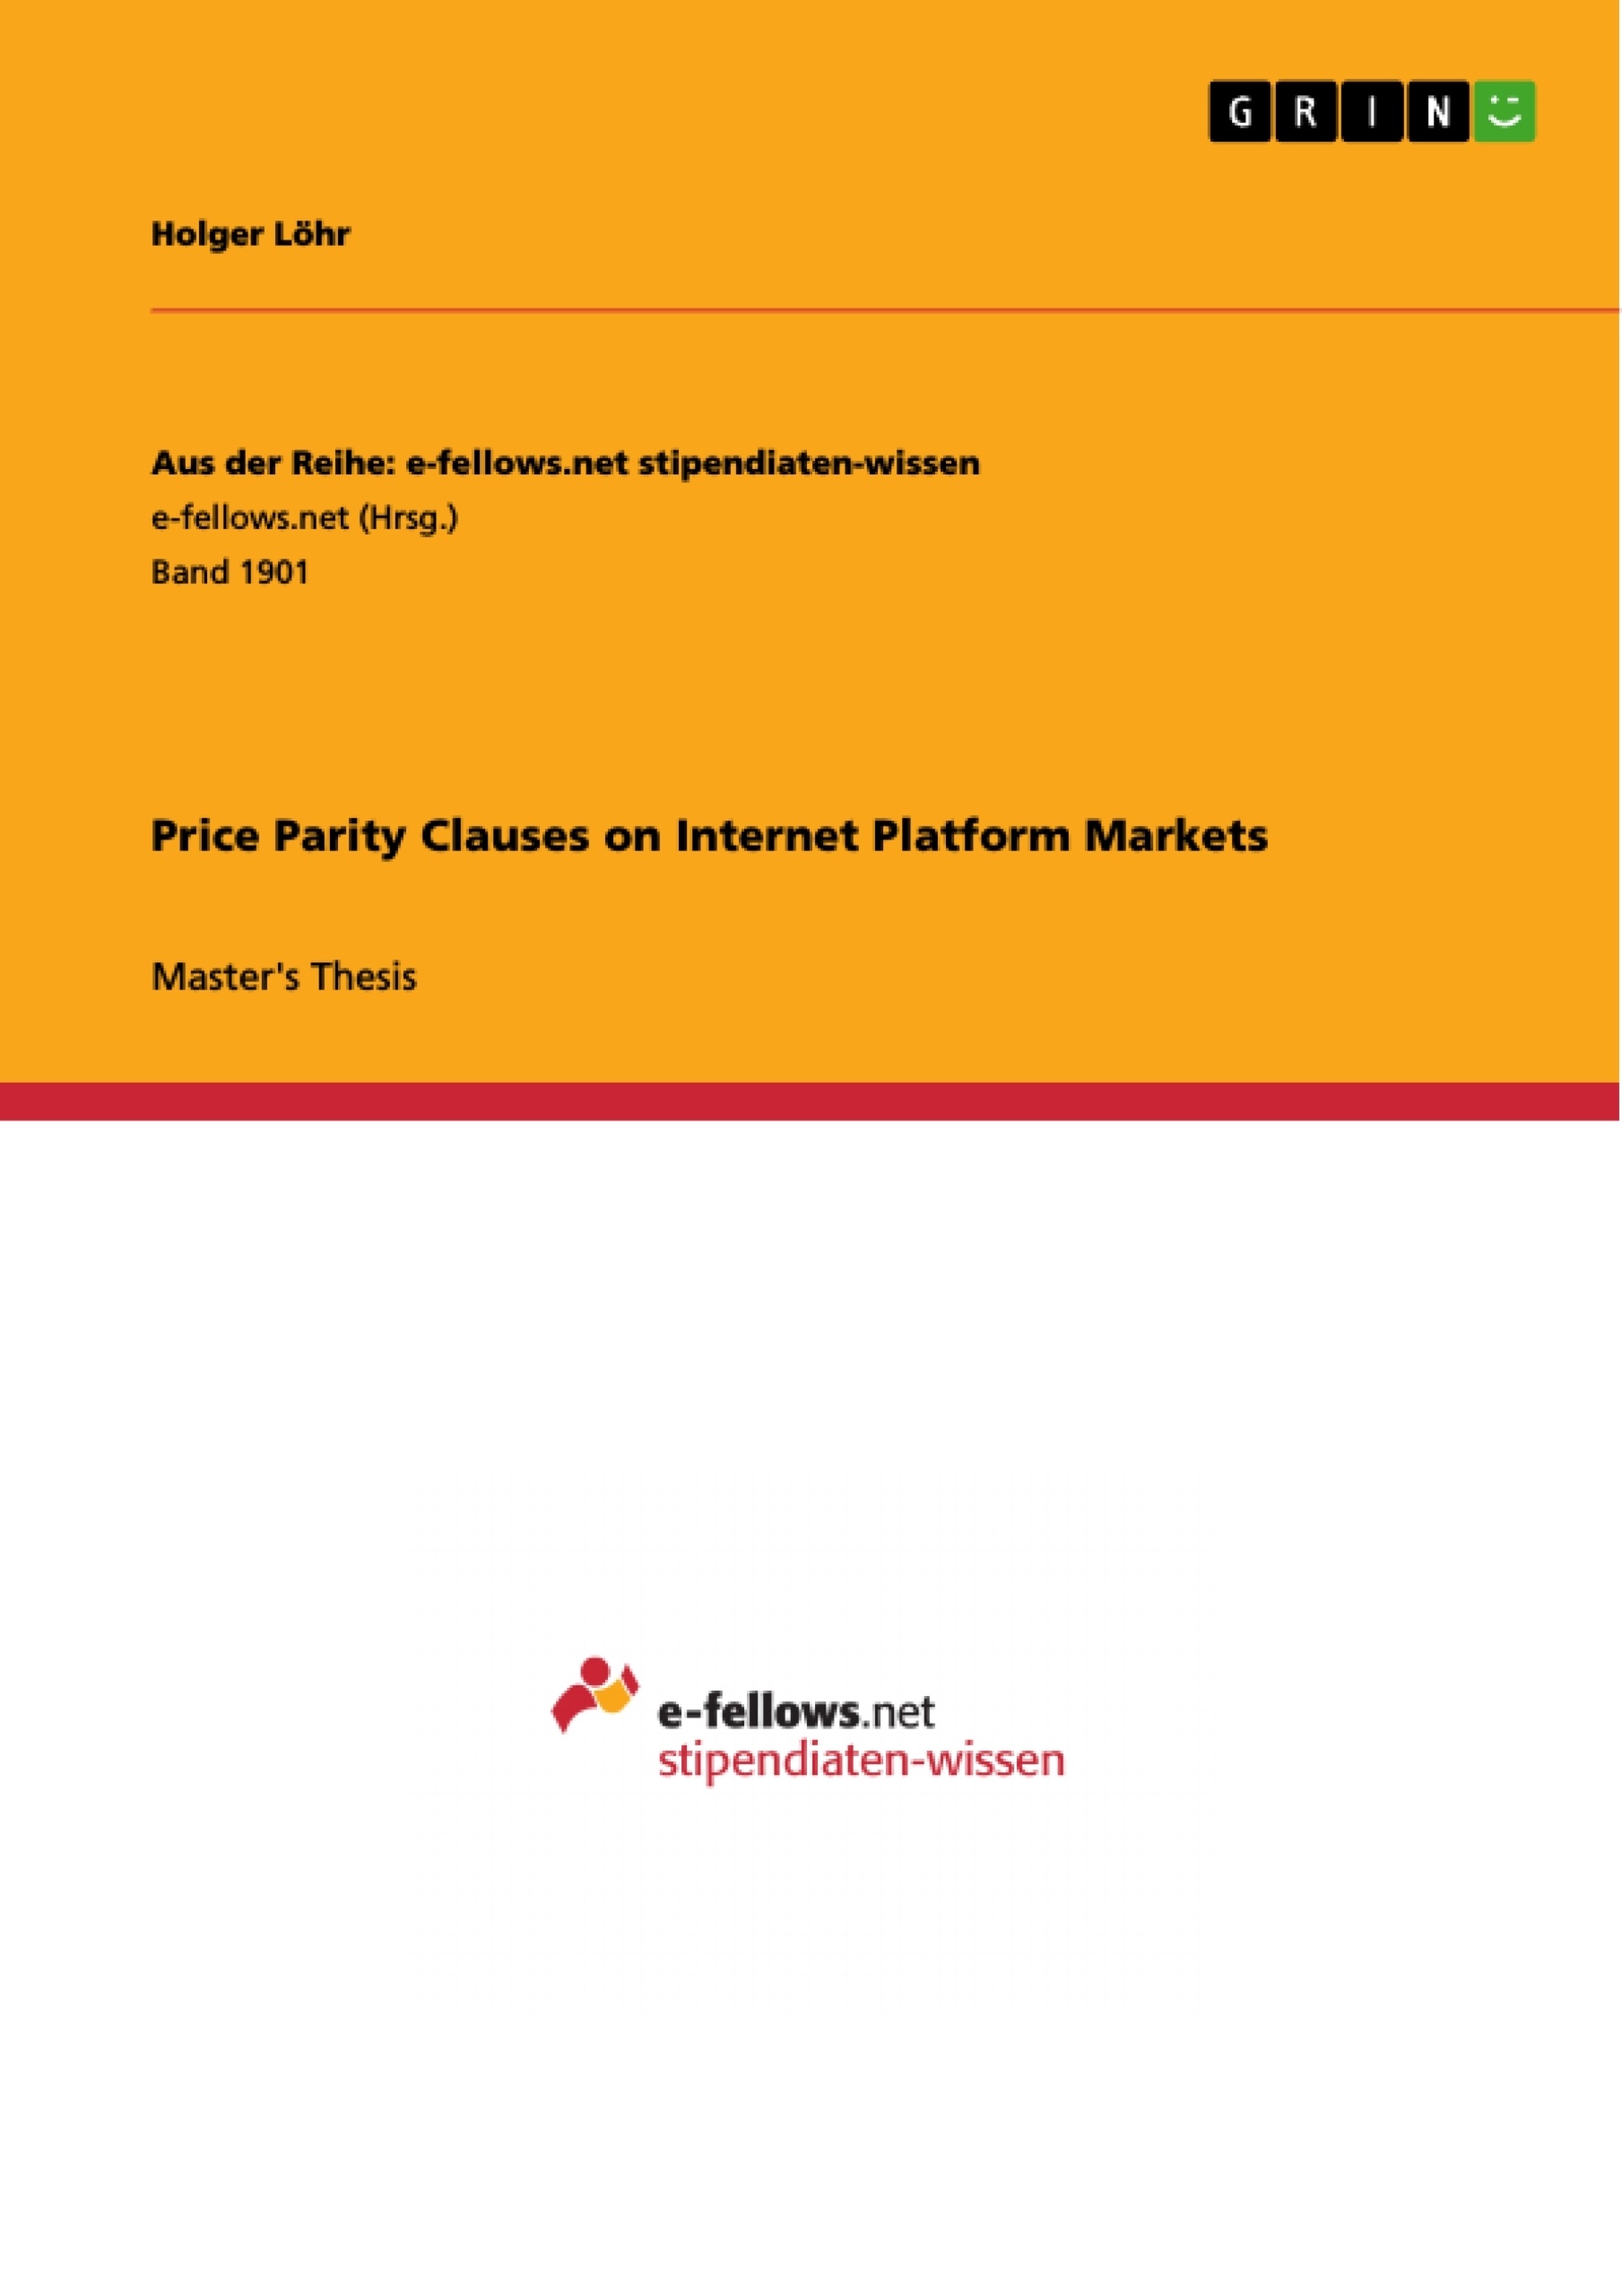 Title: Price Parity Clauses on Internet Platform Markets